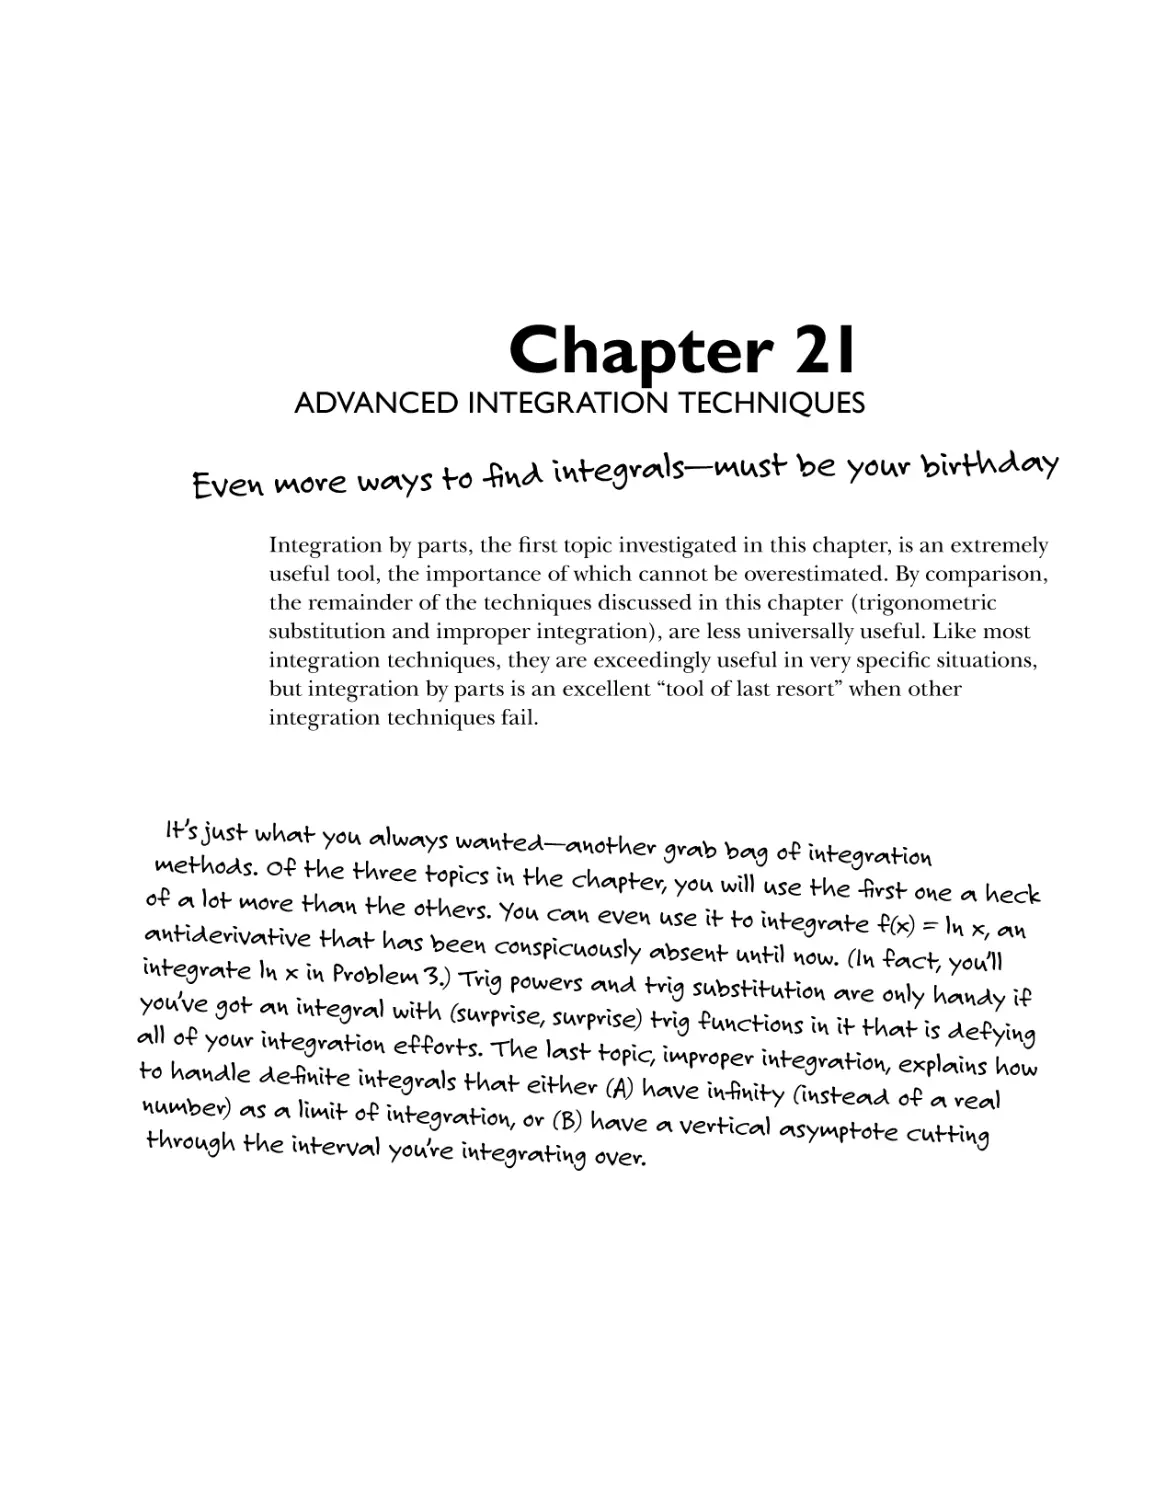 Chapter 21: Advanced Integration Techniques 363